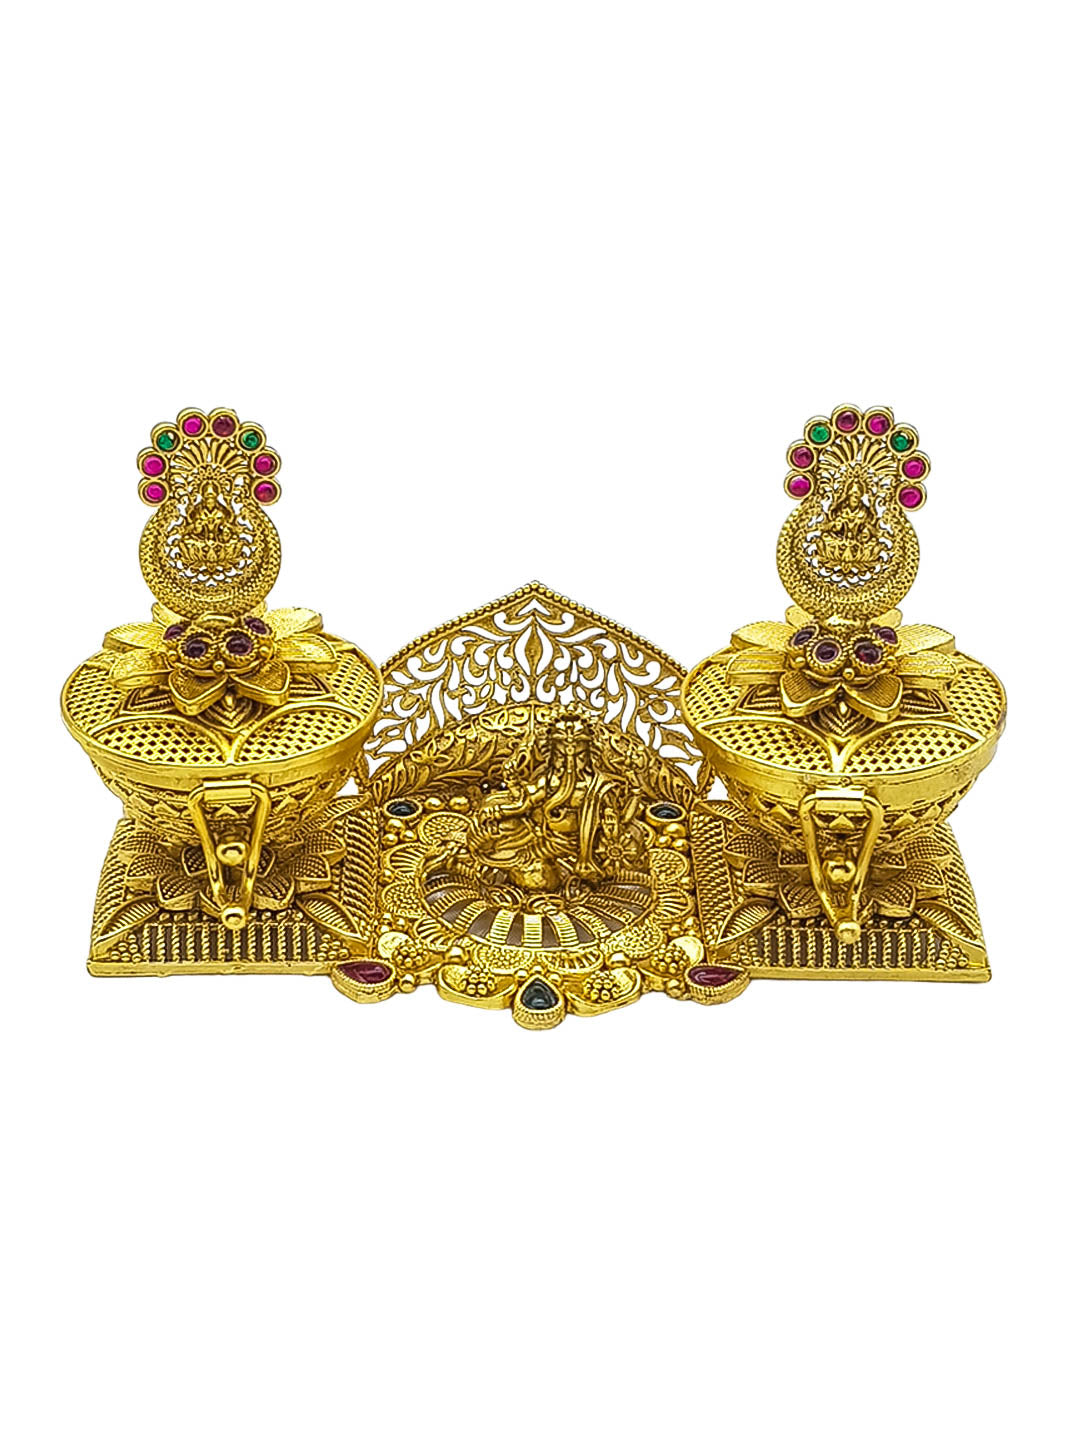 22k Gold Plated fully engraved Kumkum box with Laxmi Ganesh 22656N